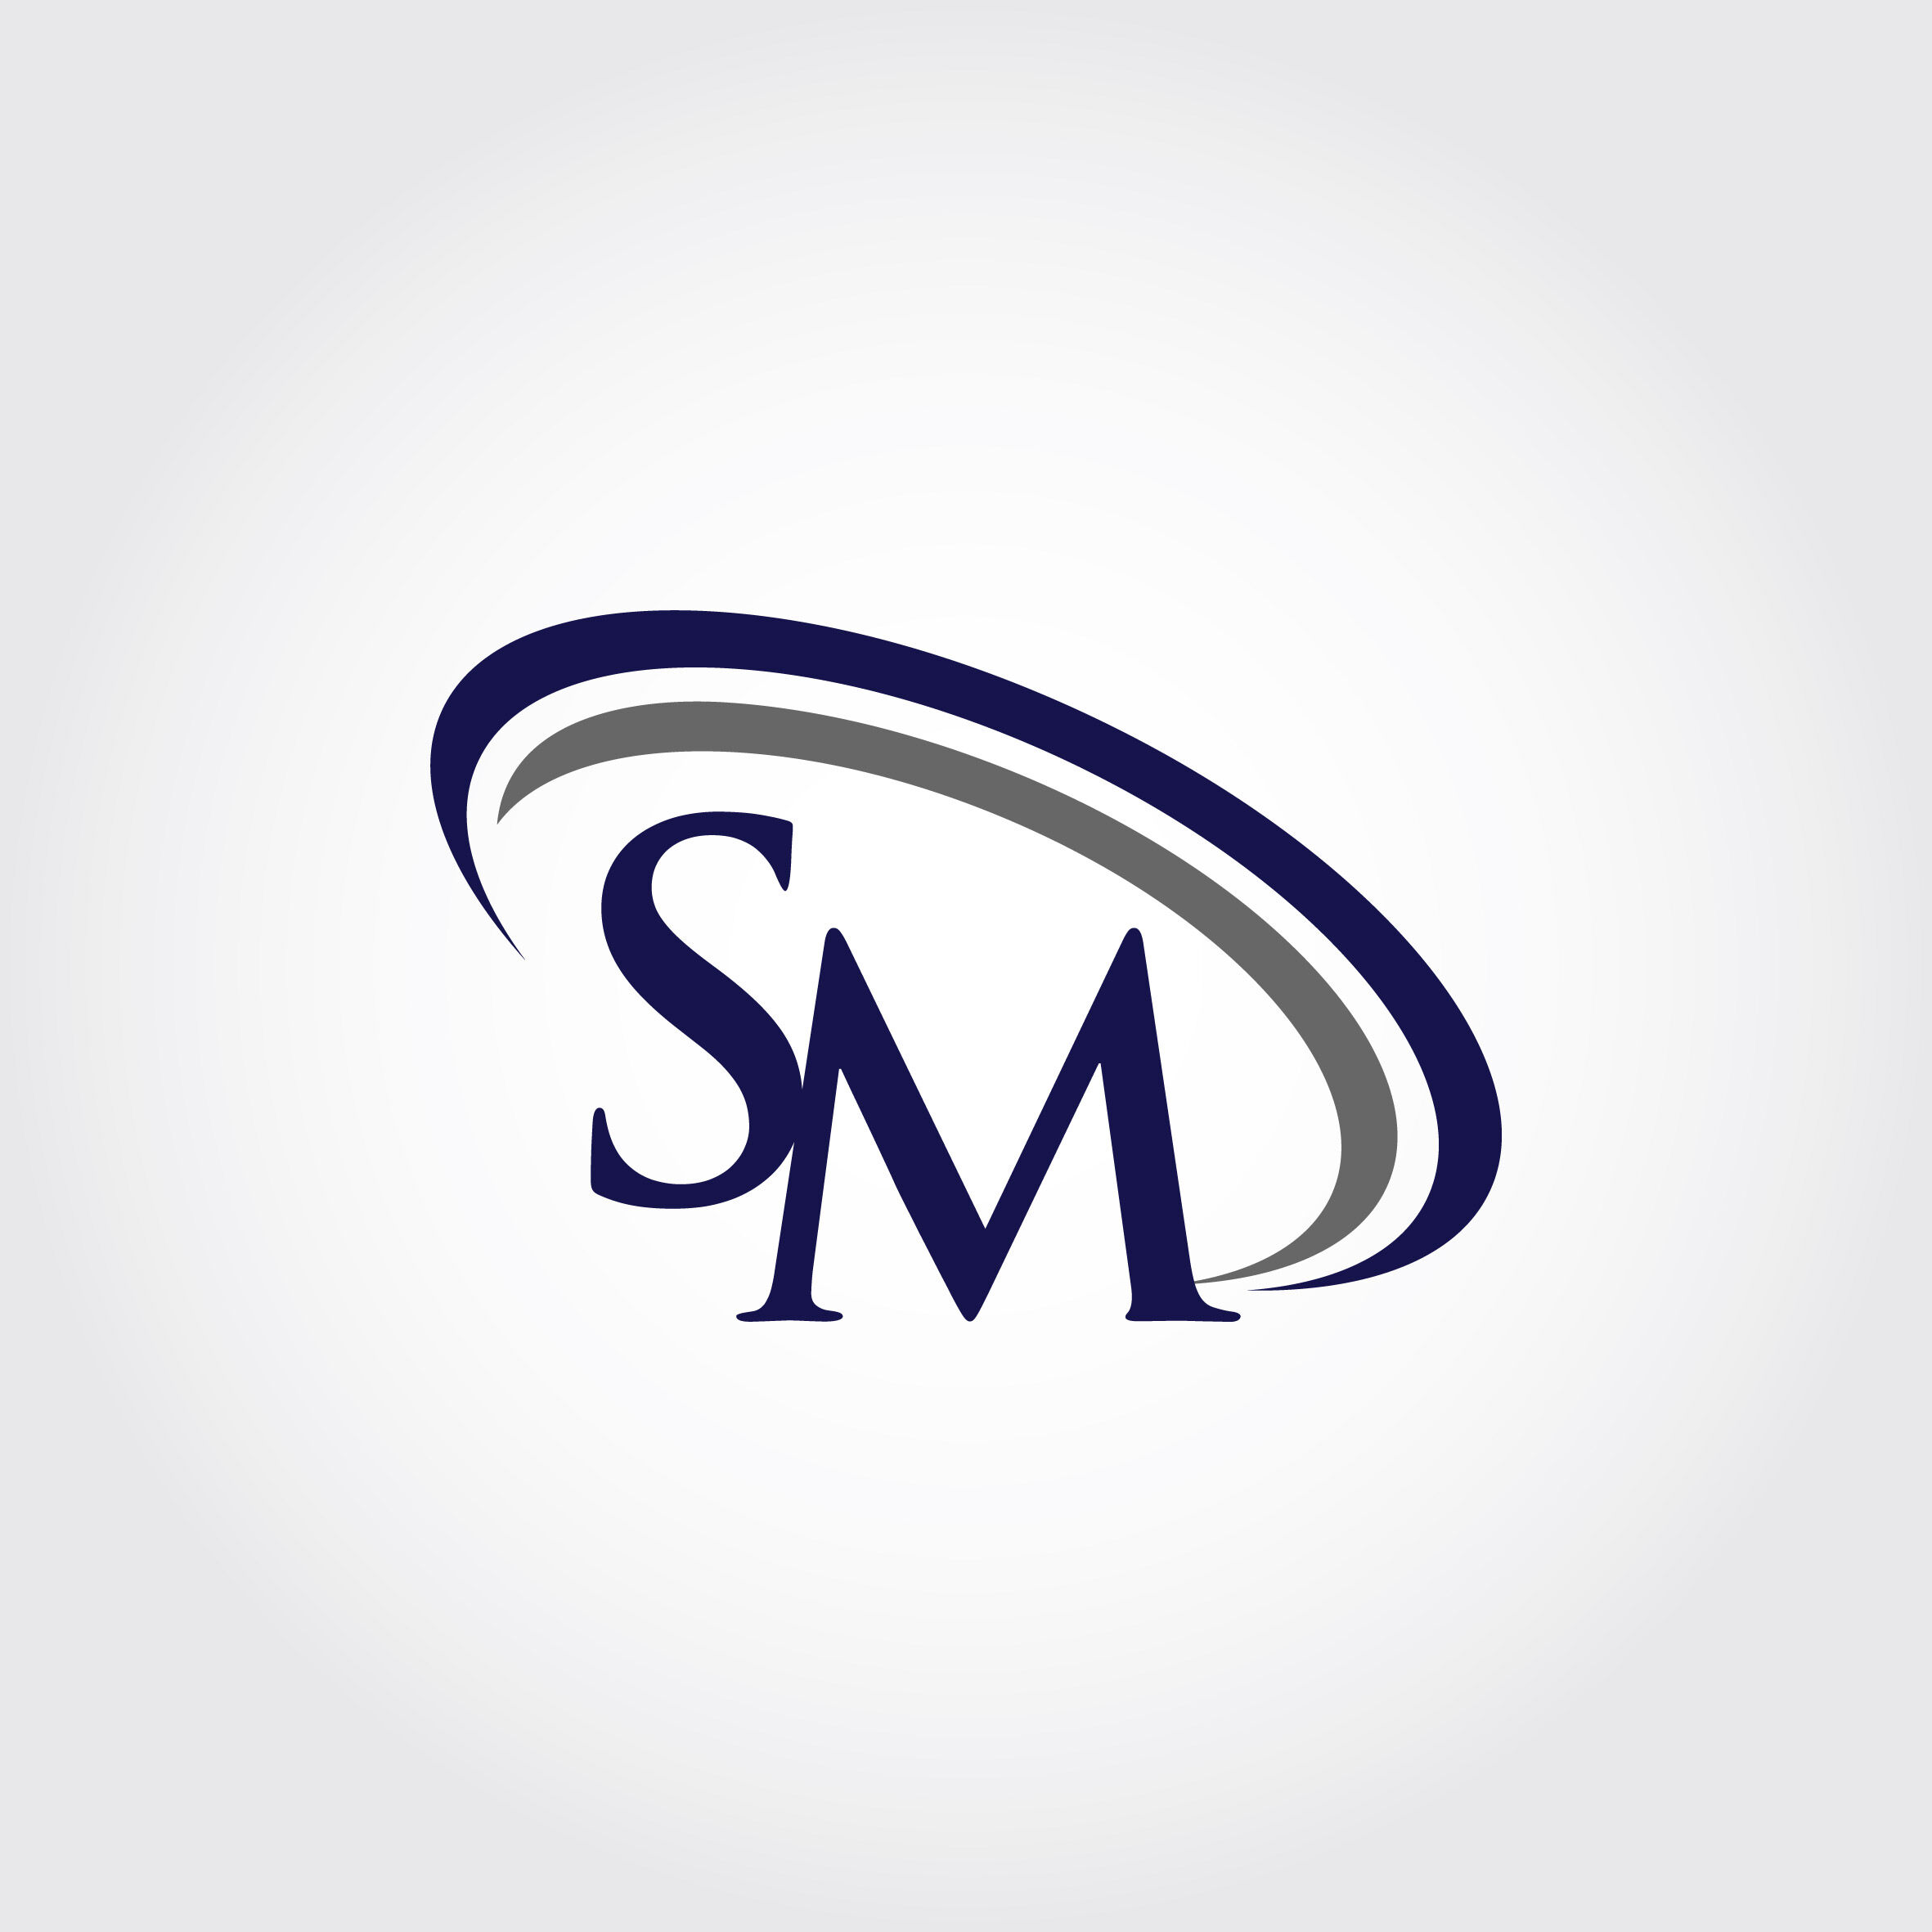 Monogram Sm Logo Design By Vectorseller Thehungryjpeg Com